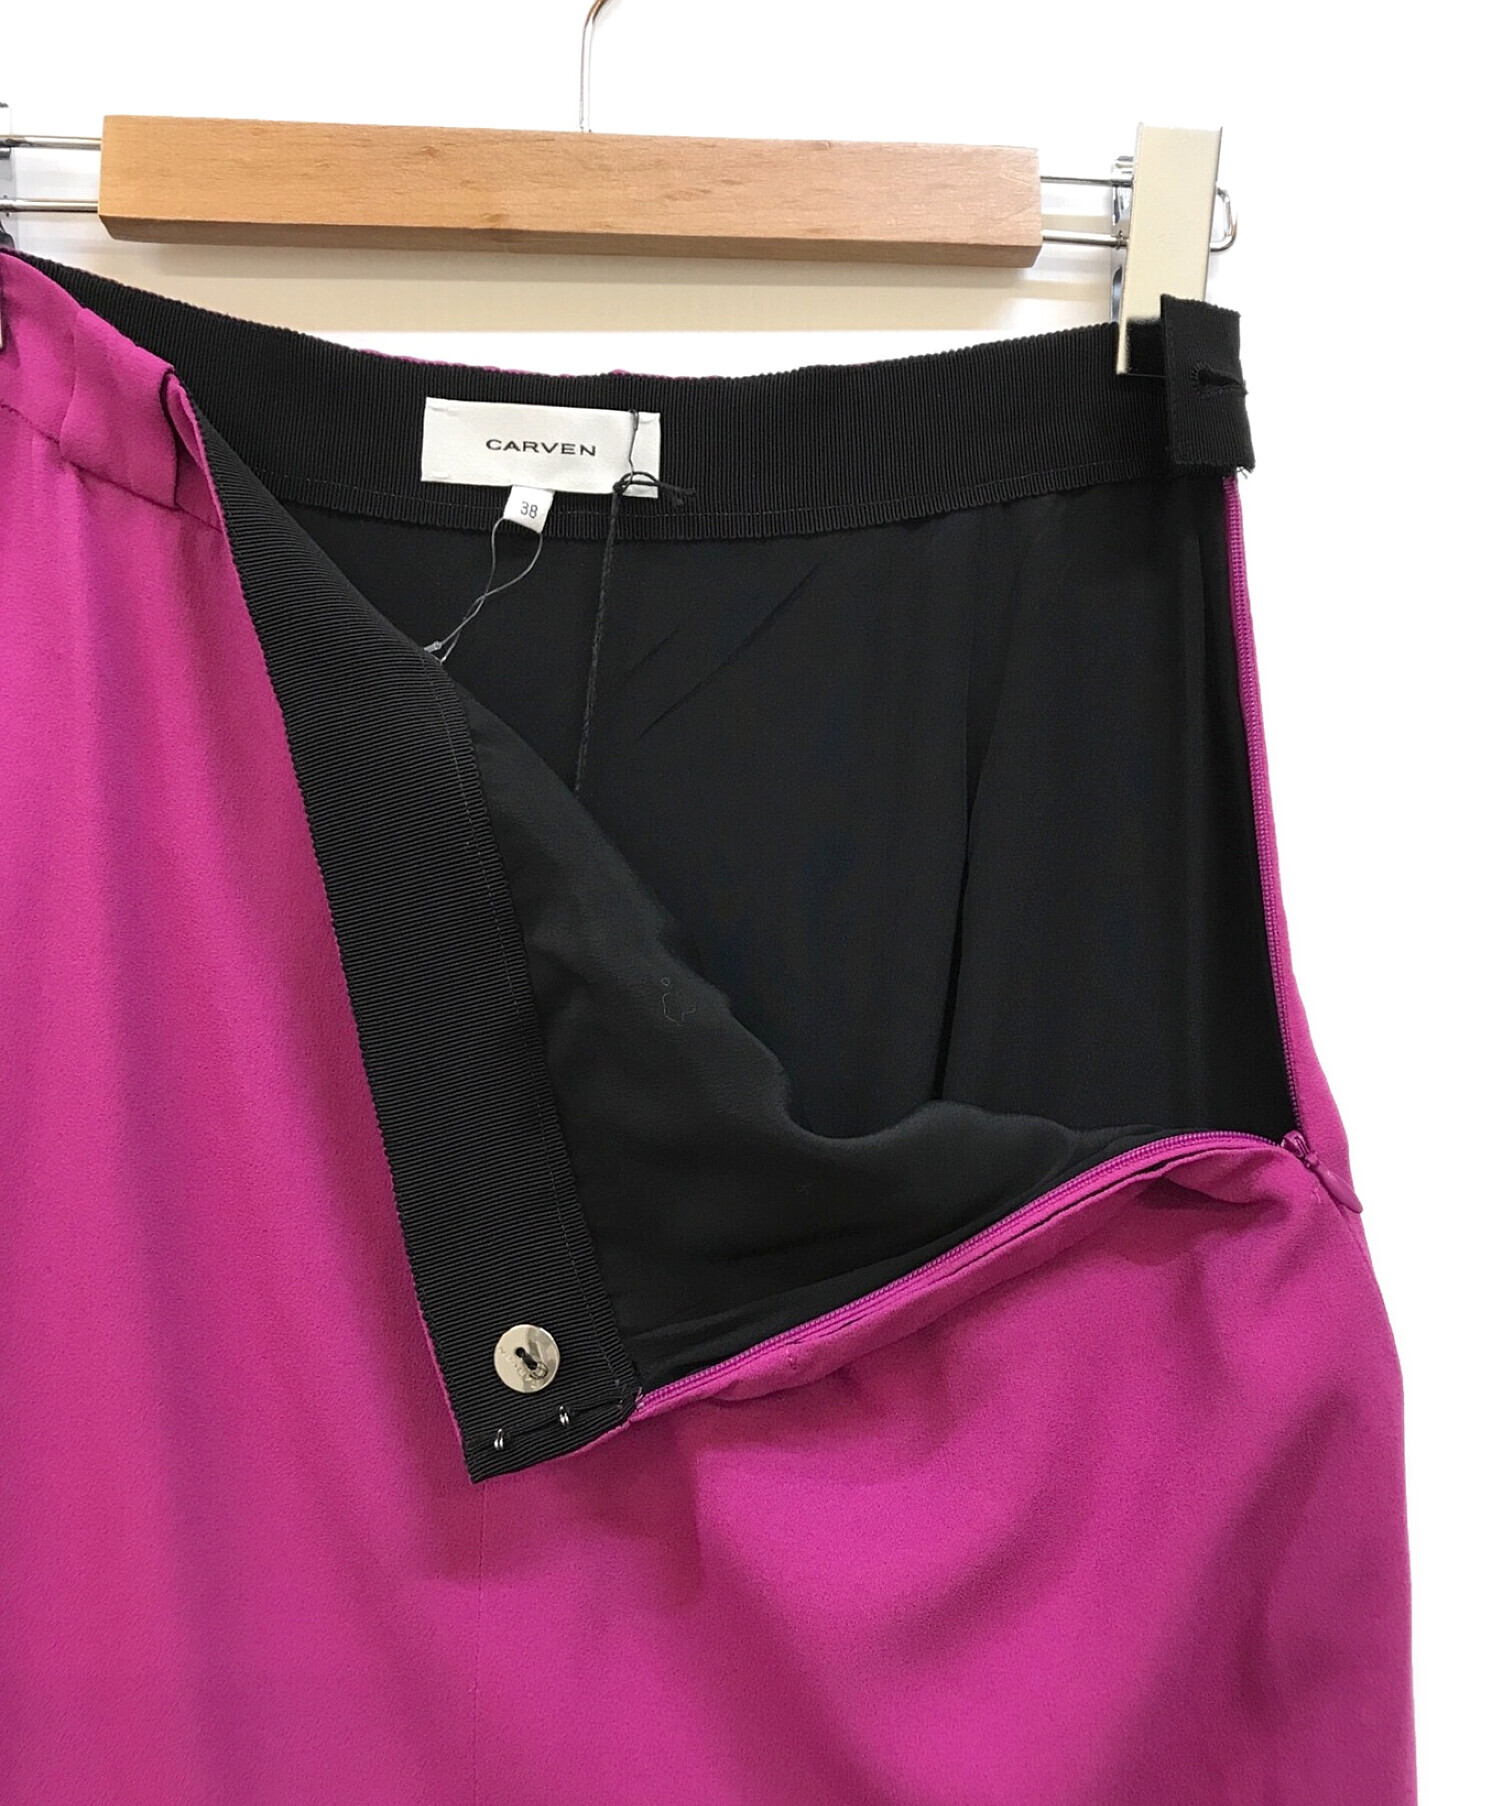 CARVEN (カルヴェン) 裾レーススカート ピンク サイズ:38